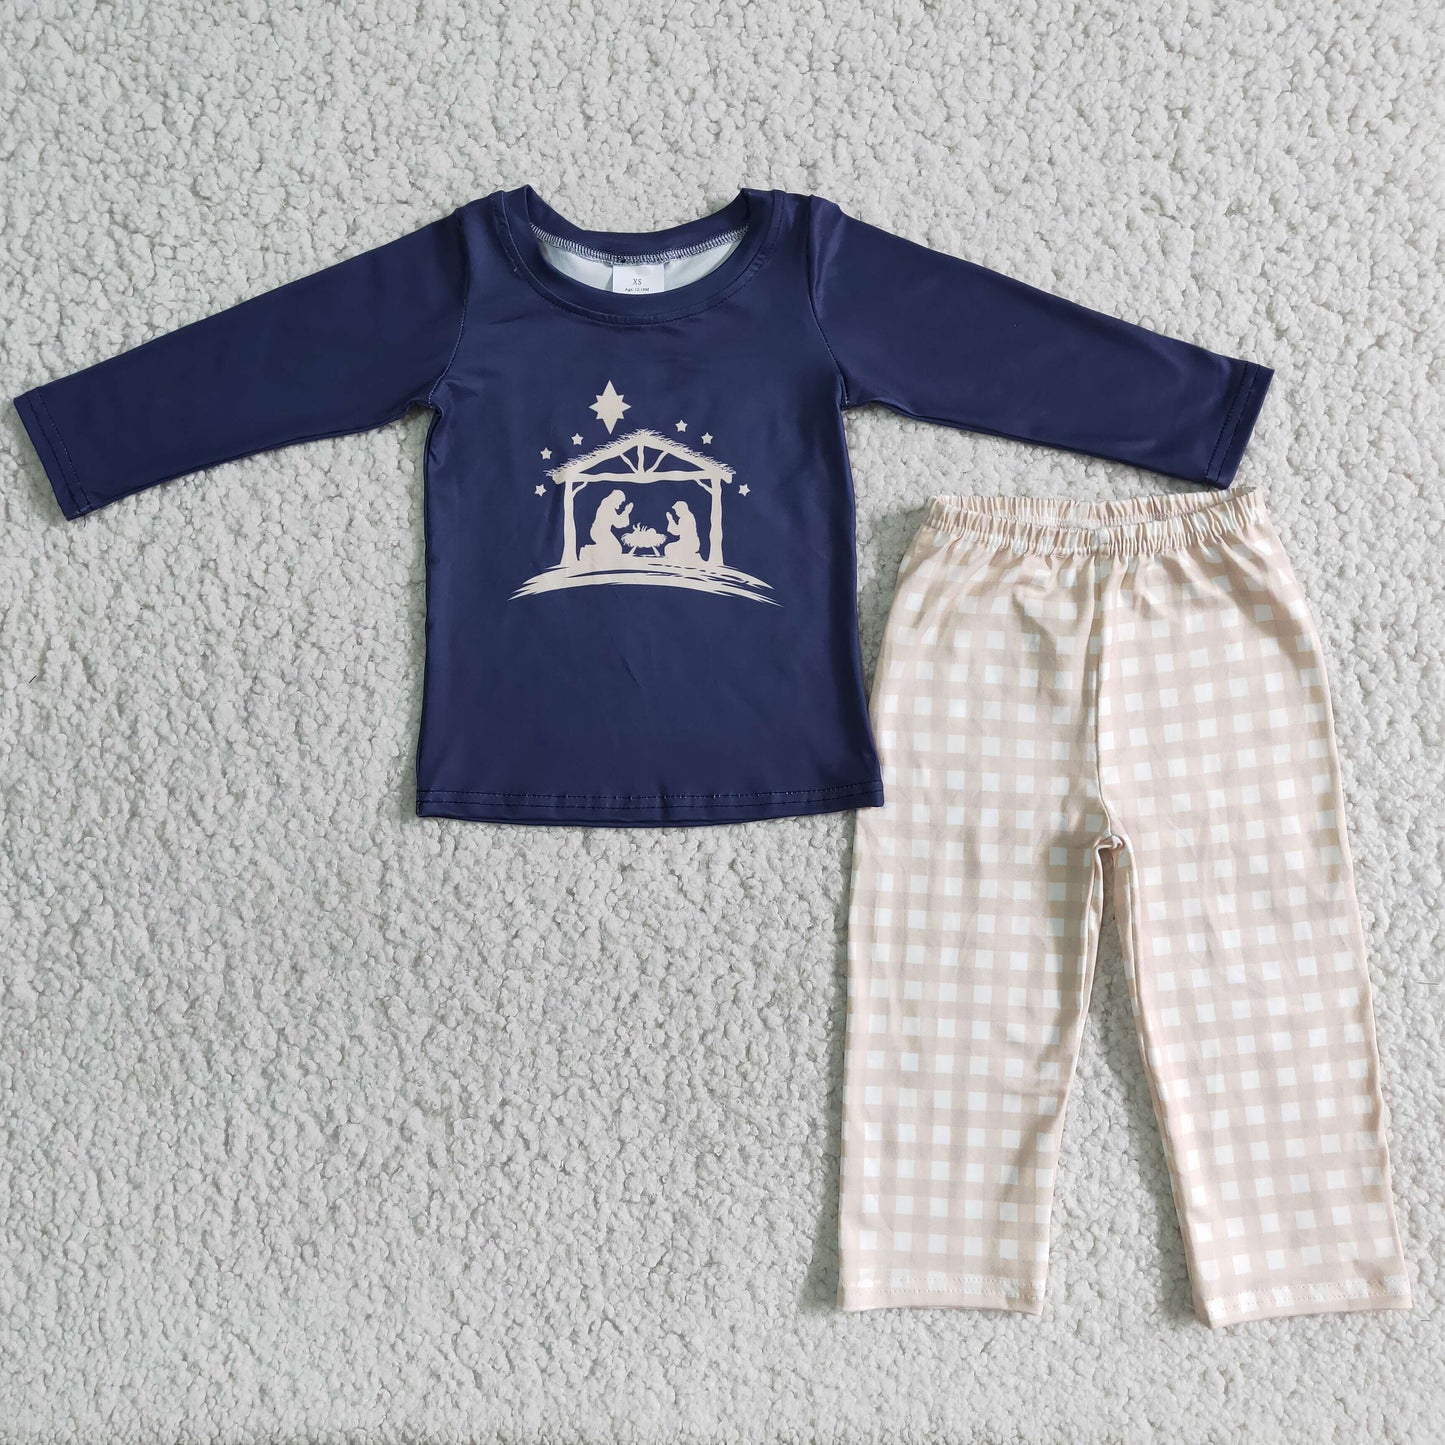 Toddler boy clothing Jesus Outfit Pants Set